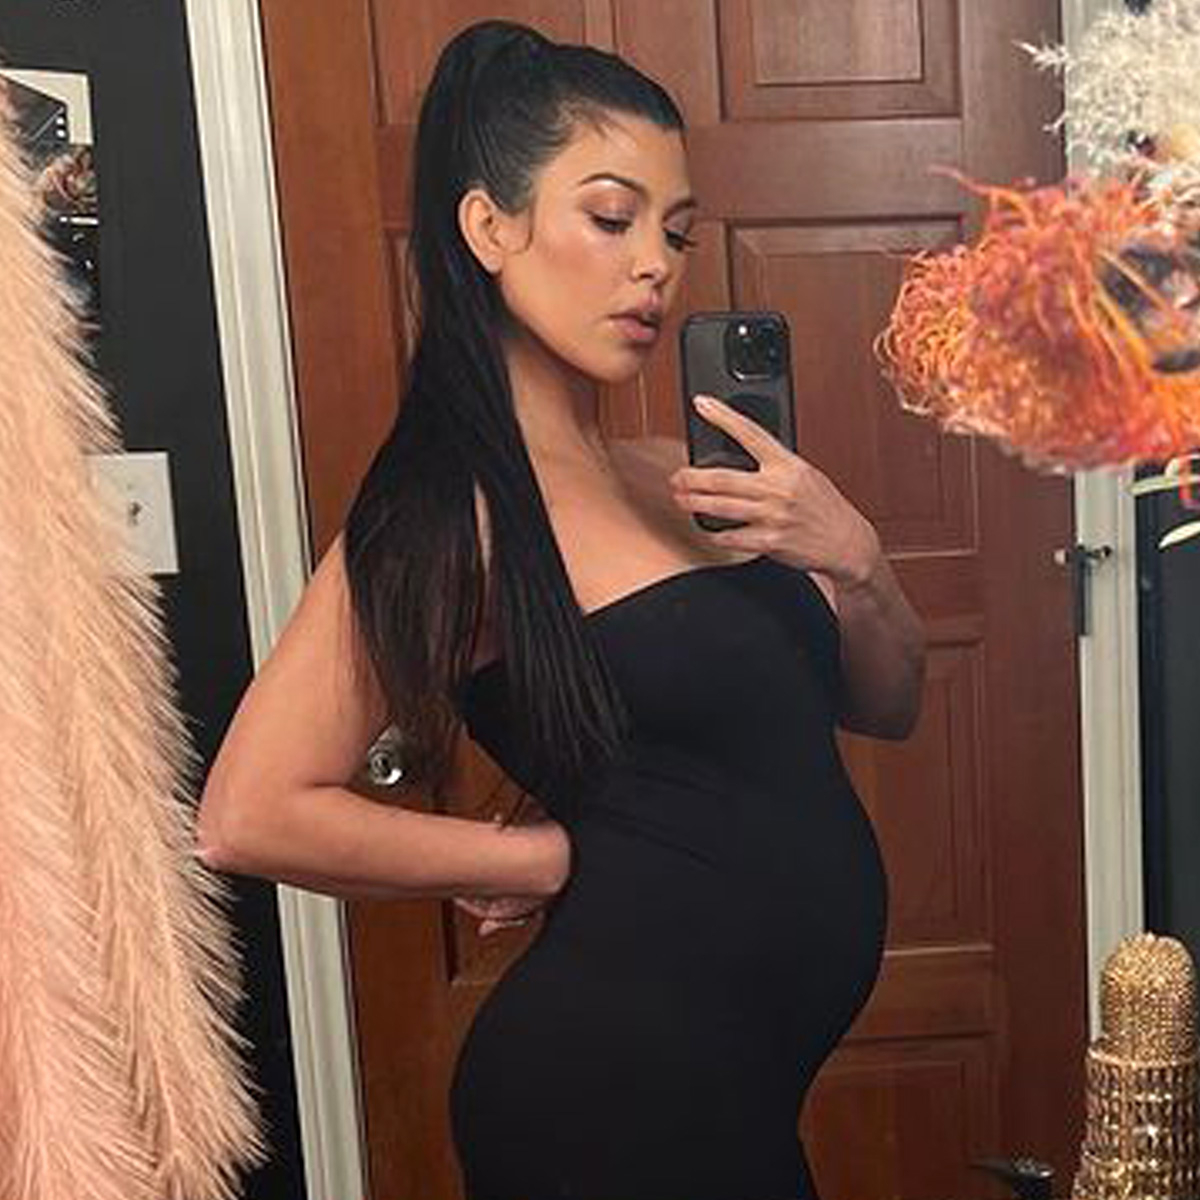 Pregnant Kourtney Kardashian shows off her big bare bump in just a